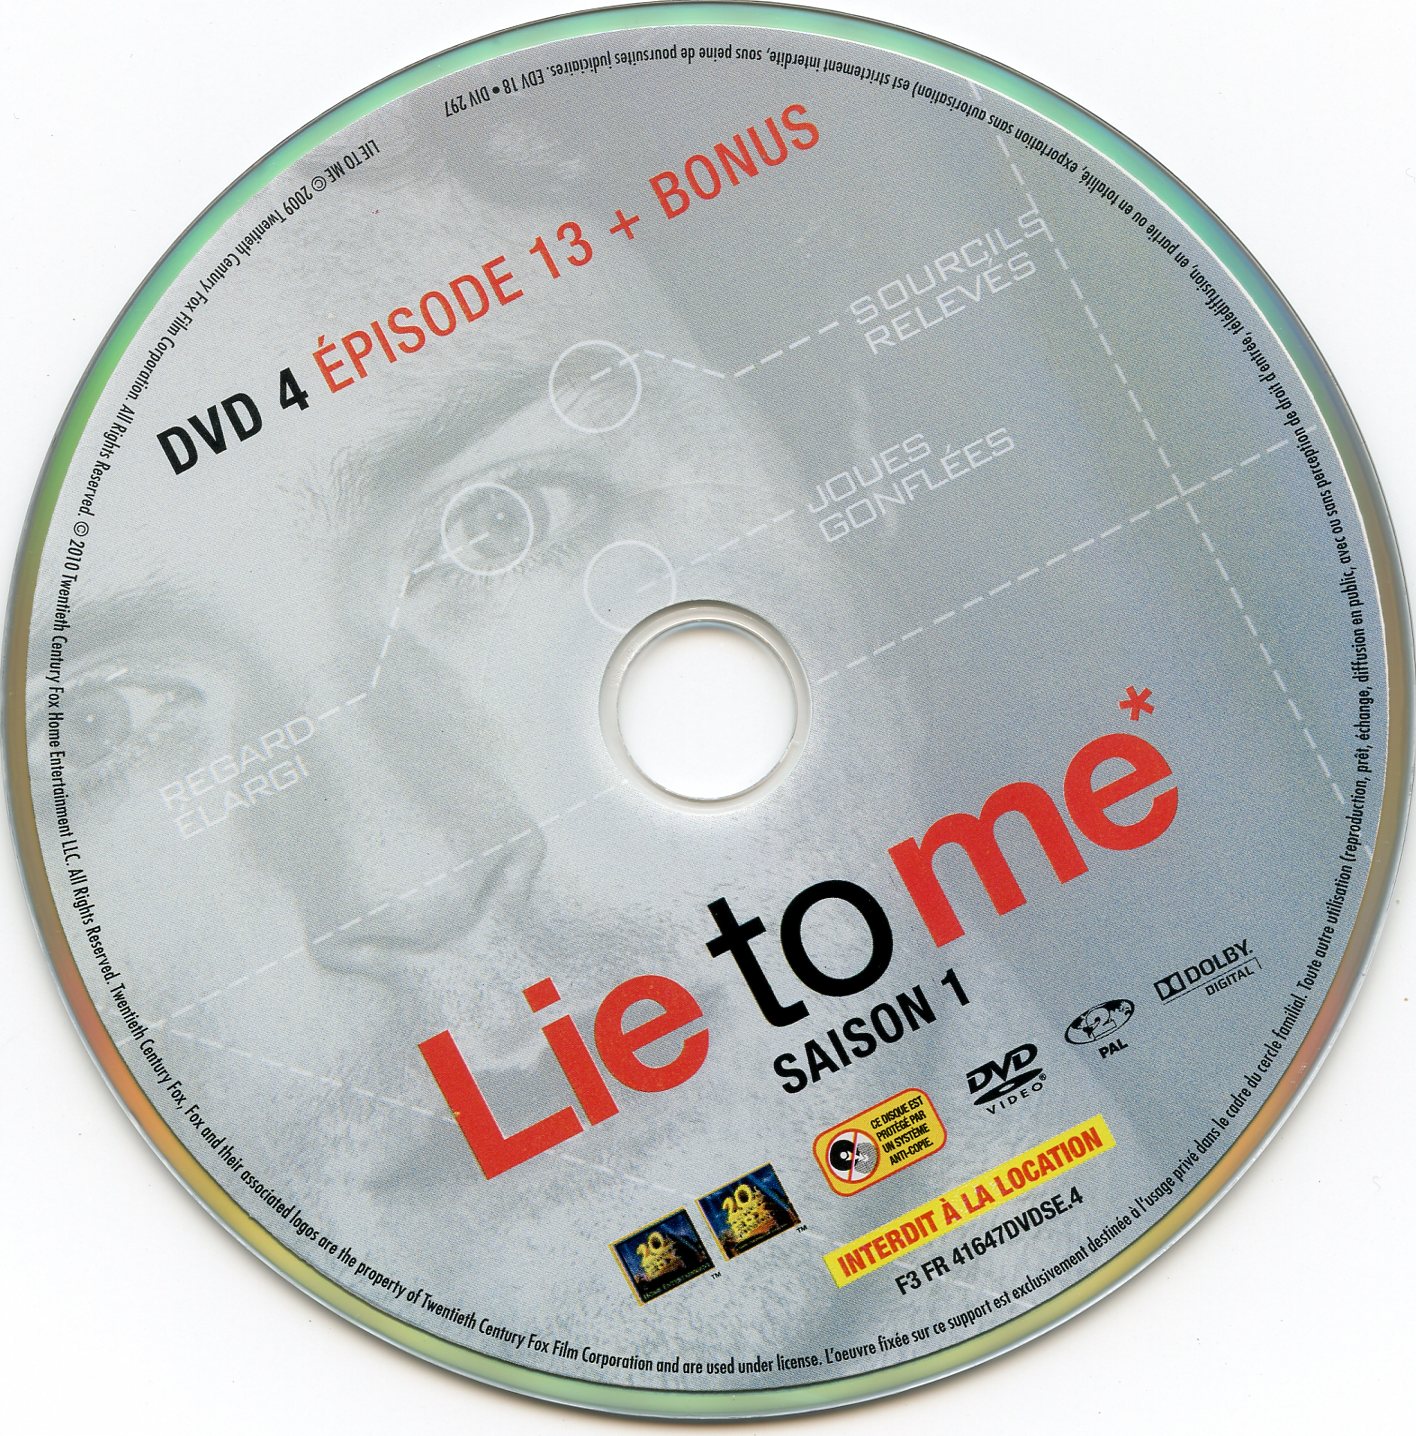 Lie to me Saison 1 DVD 4